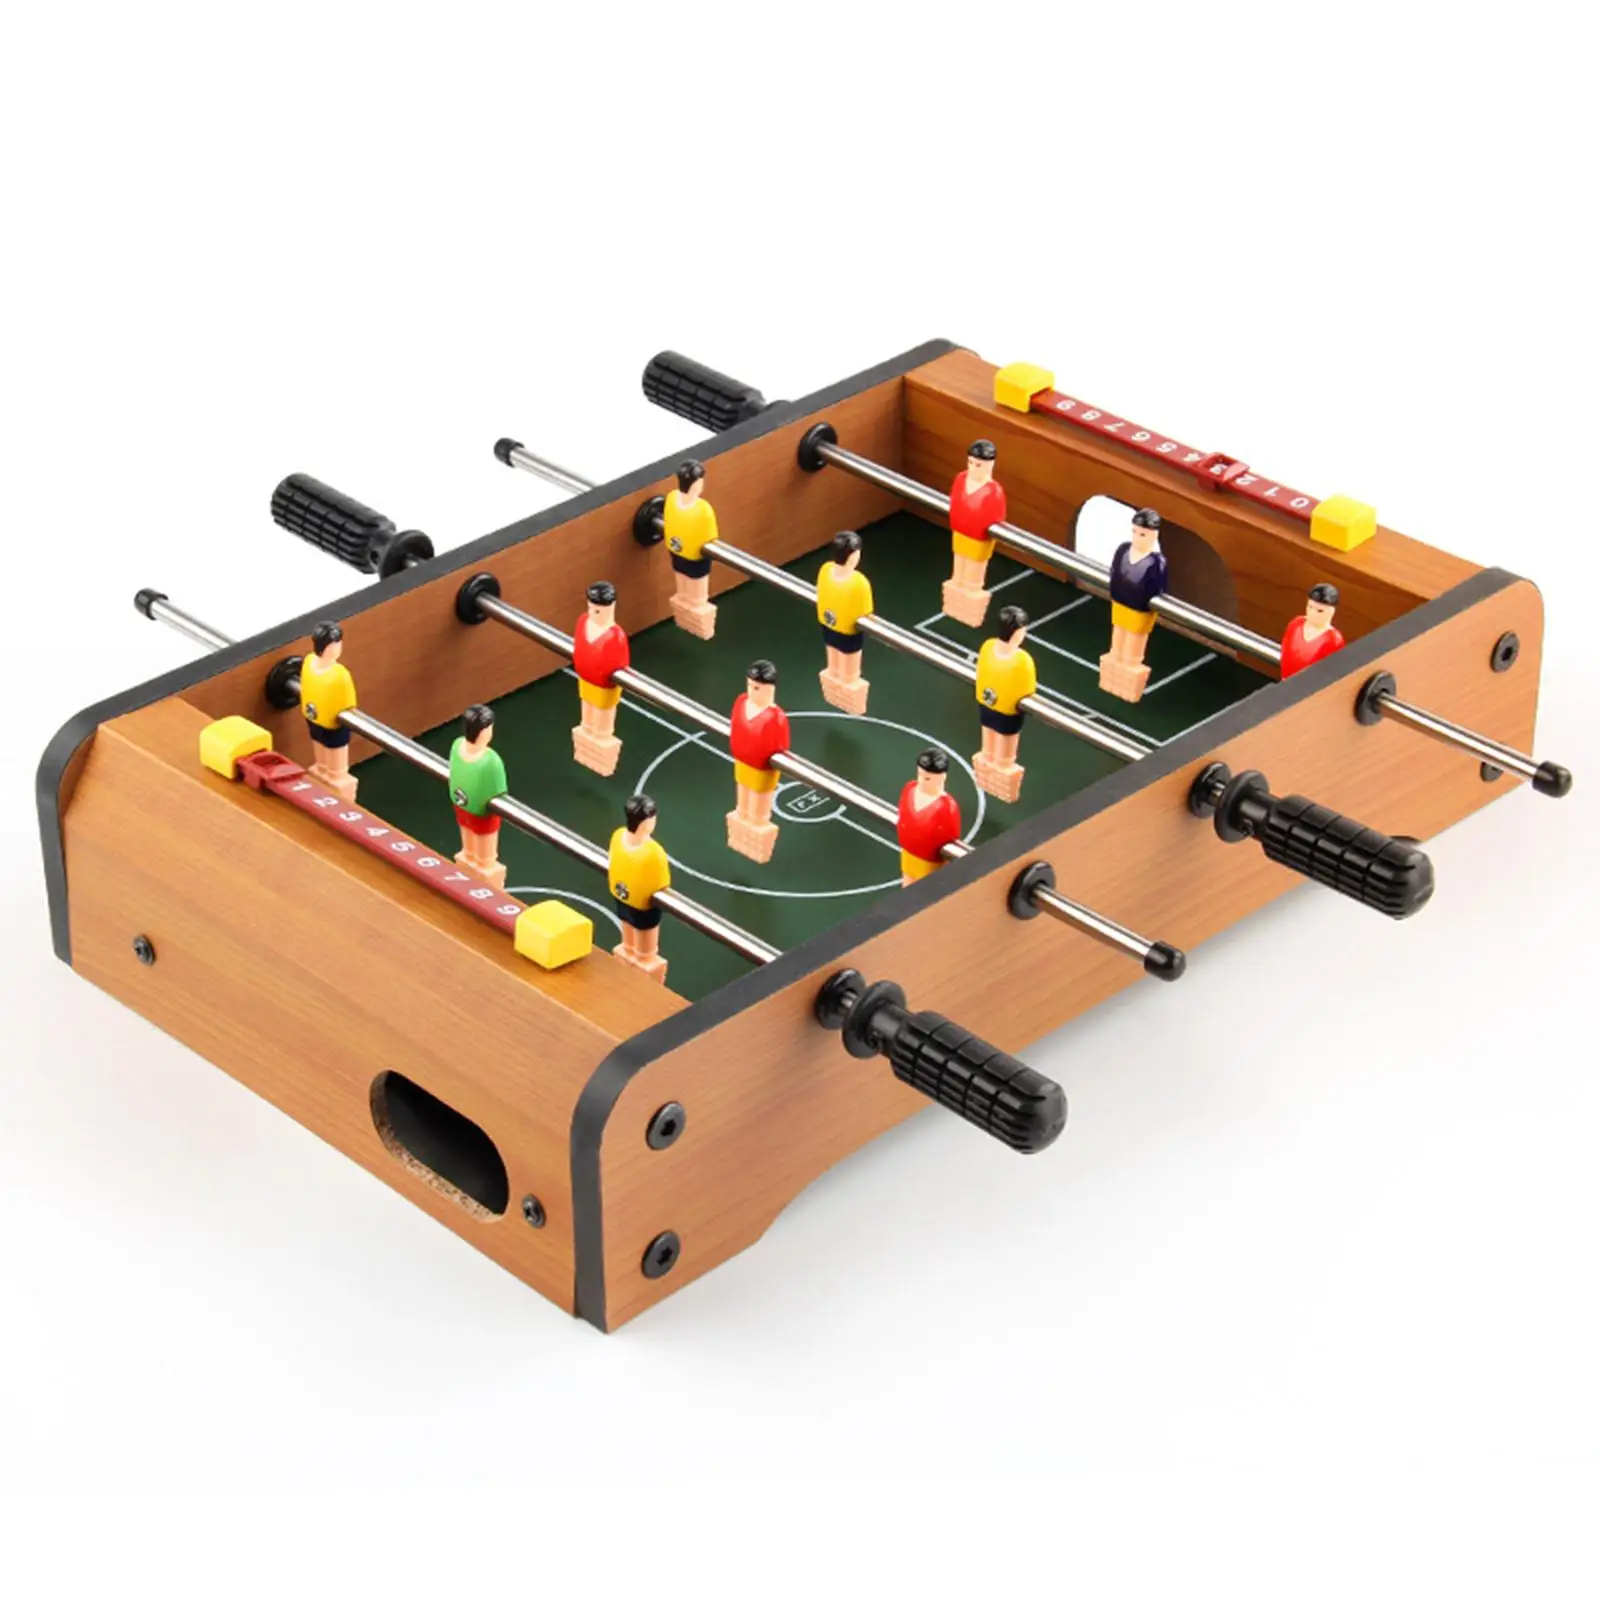 Tabletops Football Table Games, Portable Table Top Football, Educational Toys, Portable Recreational Hand Soccer